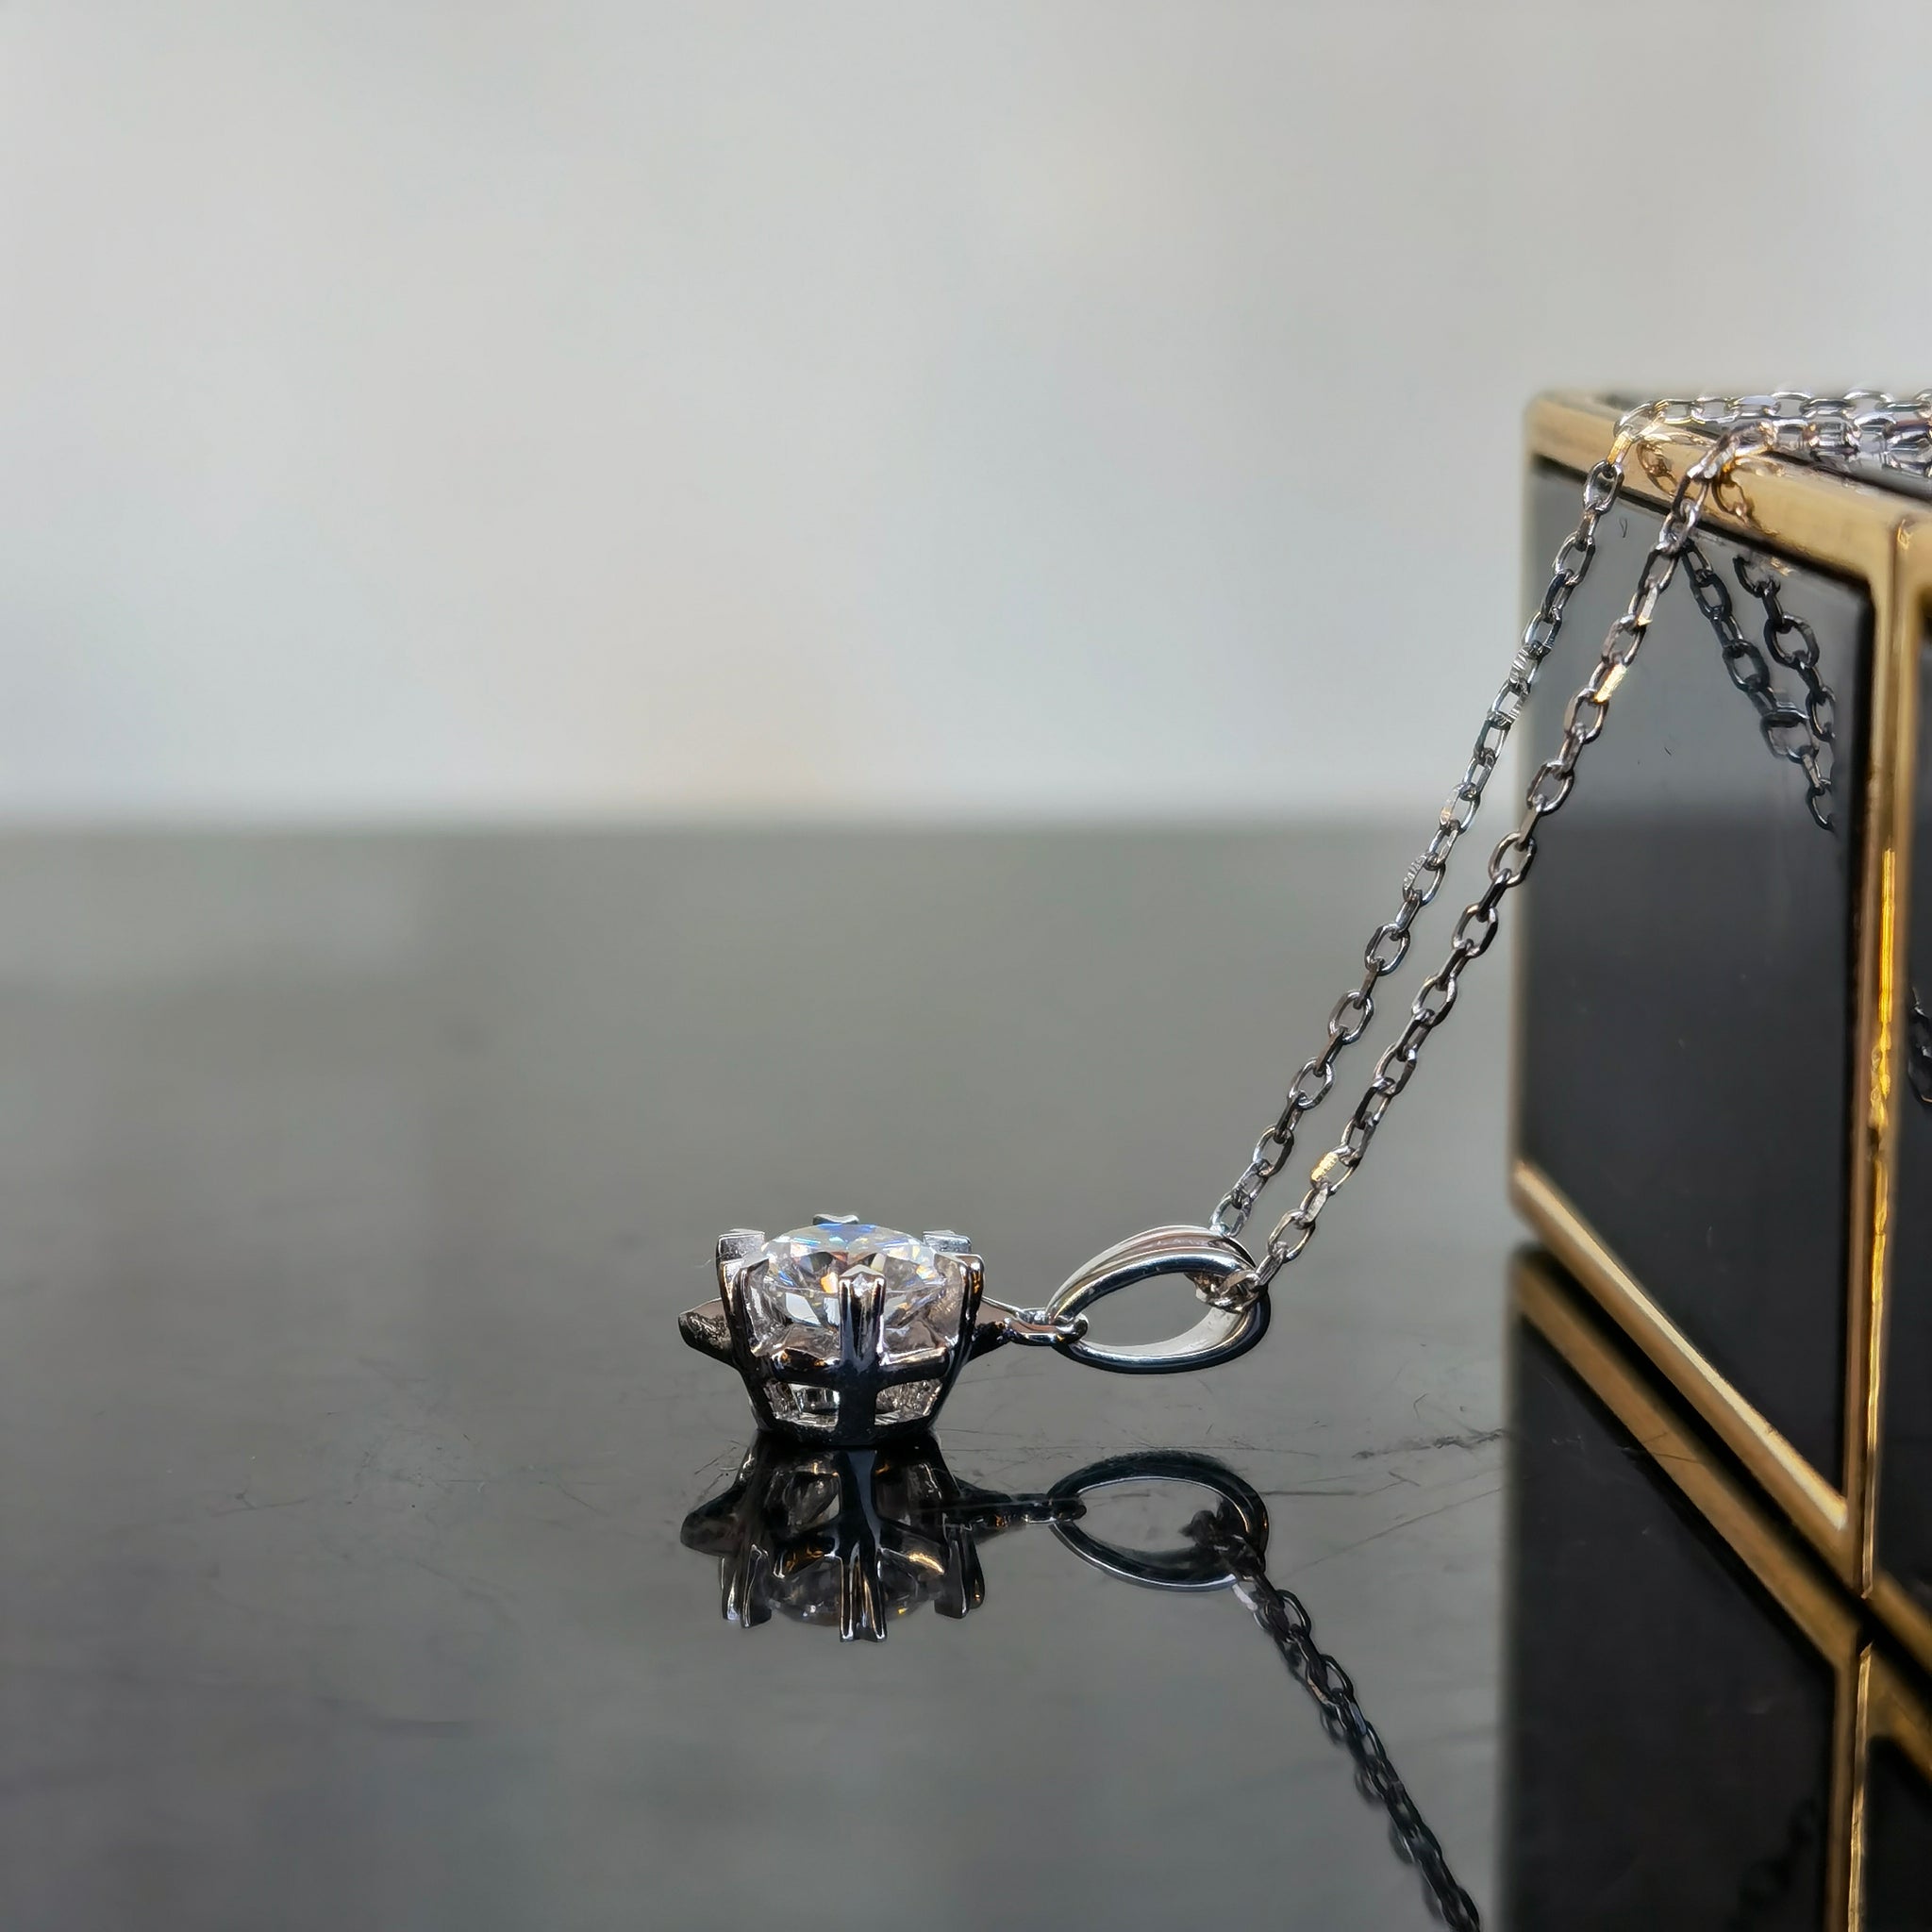 Doveggs premade solitaire 0.5ct moissanite pendant necklace (pendant only)